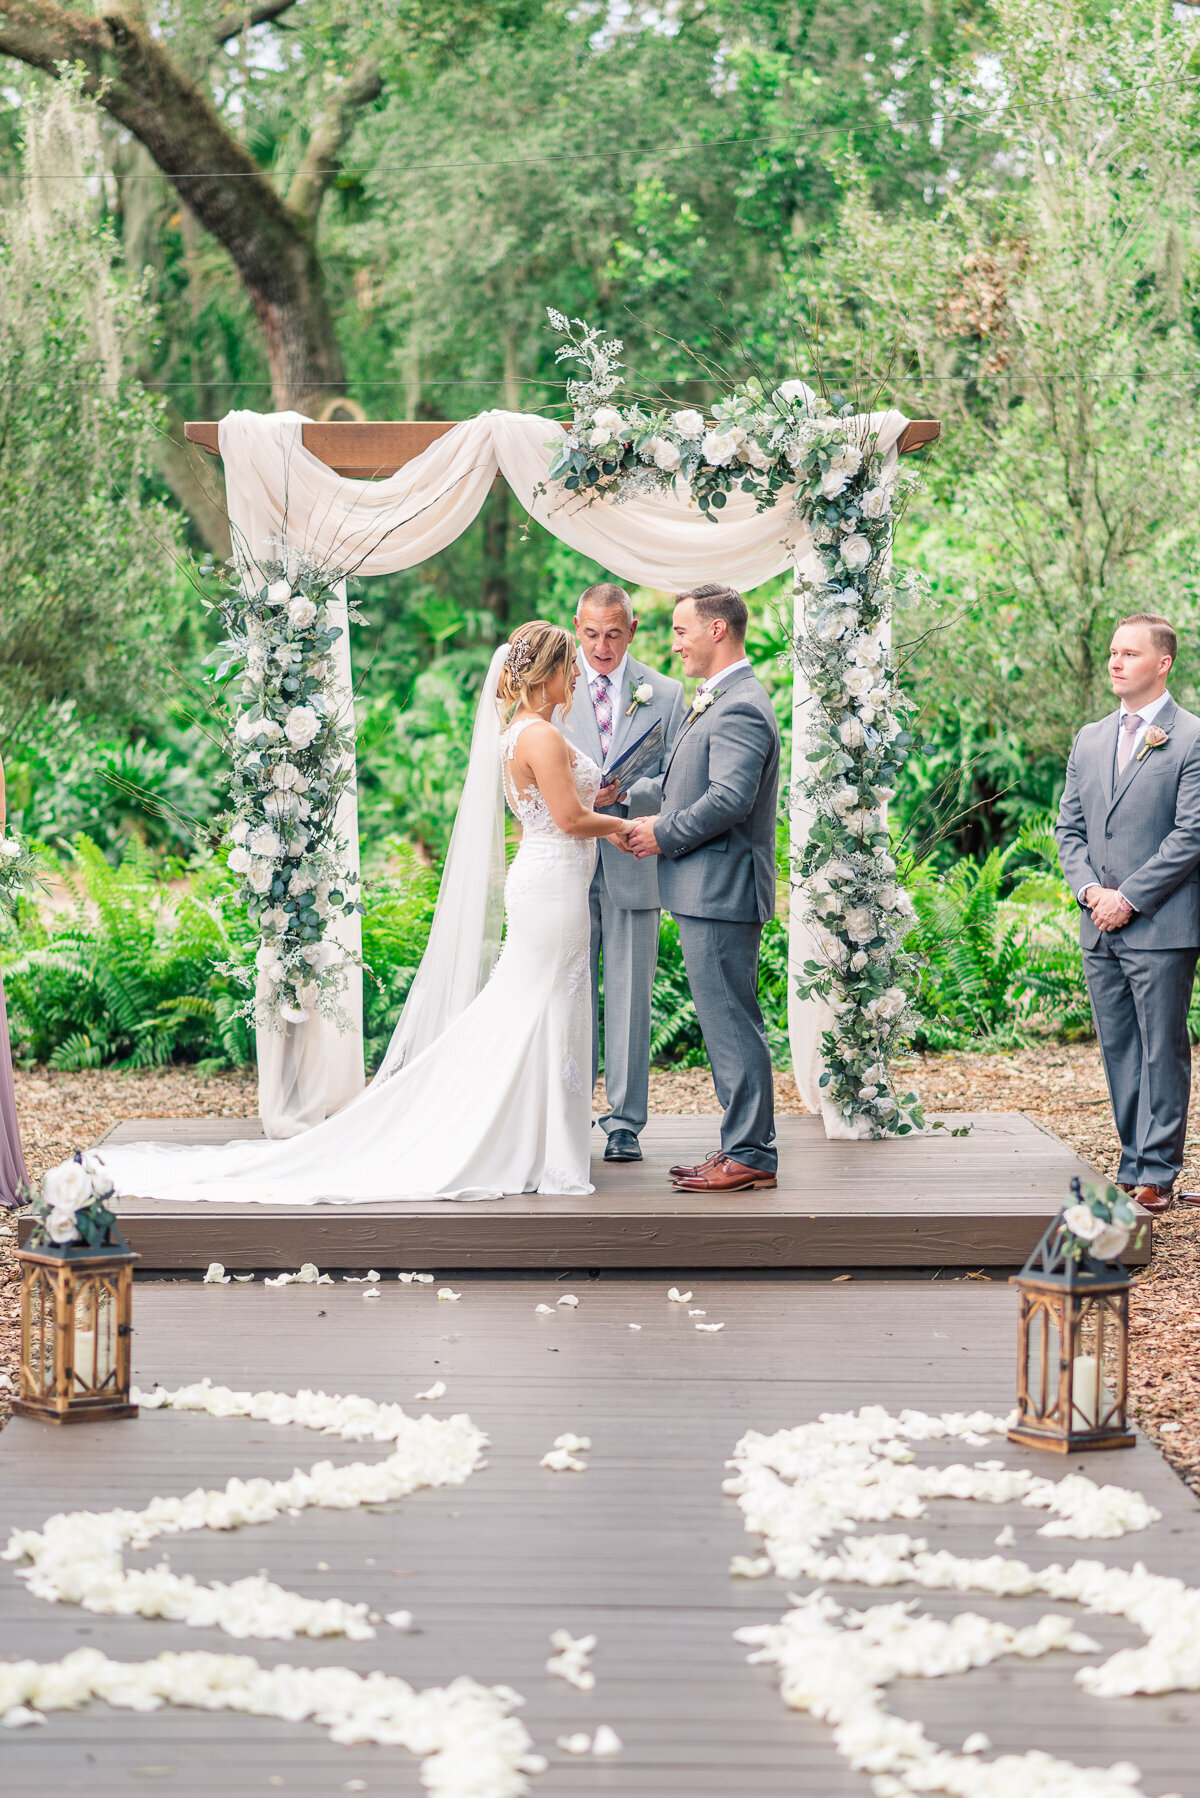 Nicholette & Kyle Cross Creek Ranch Wedding Ceremony | Lisa Marshall Photography